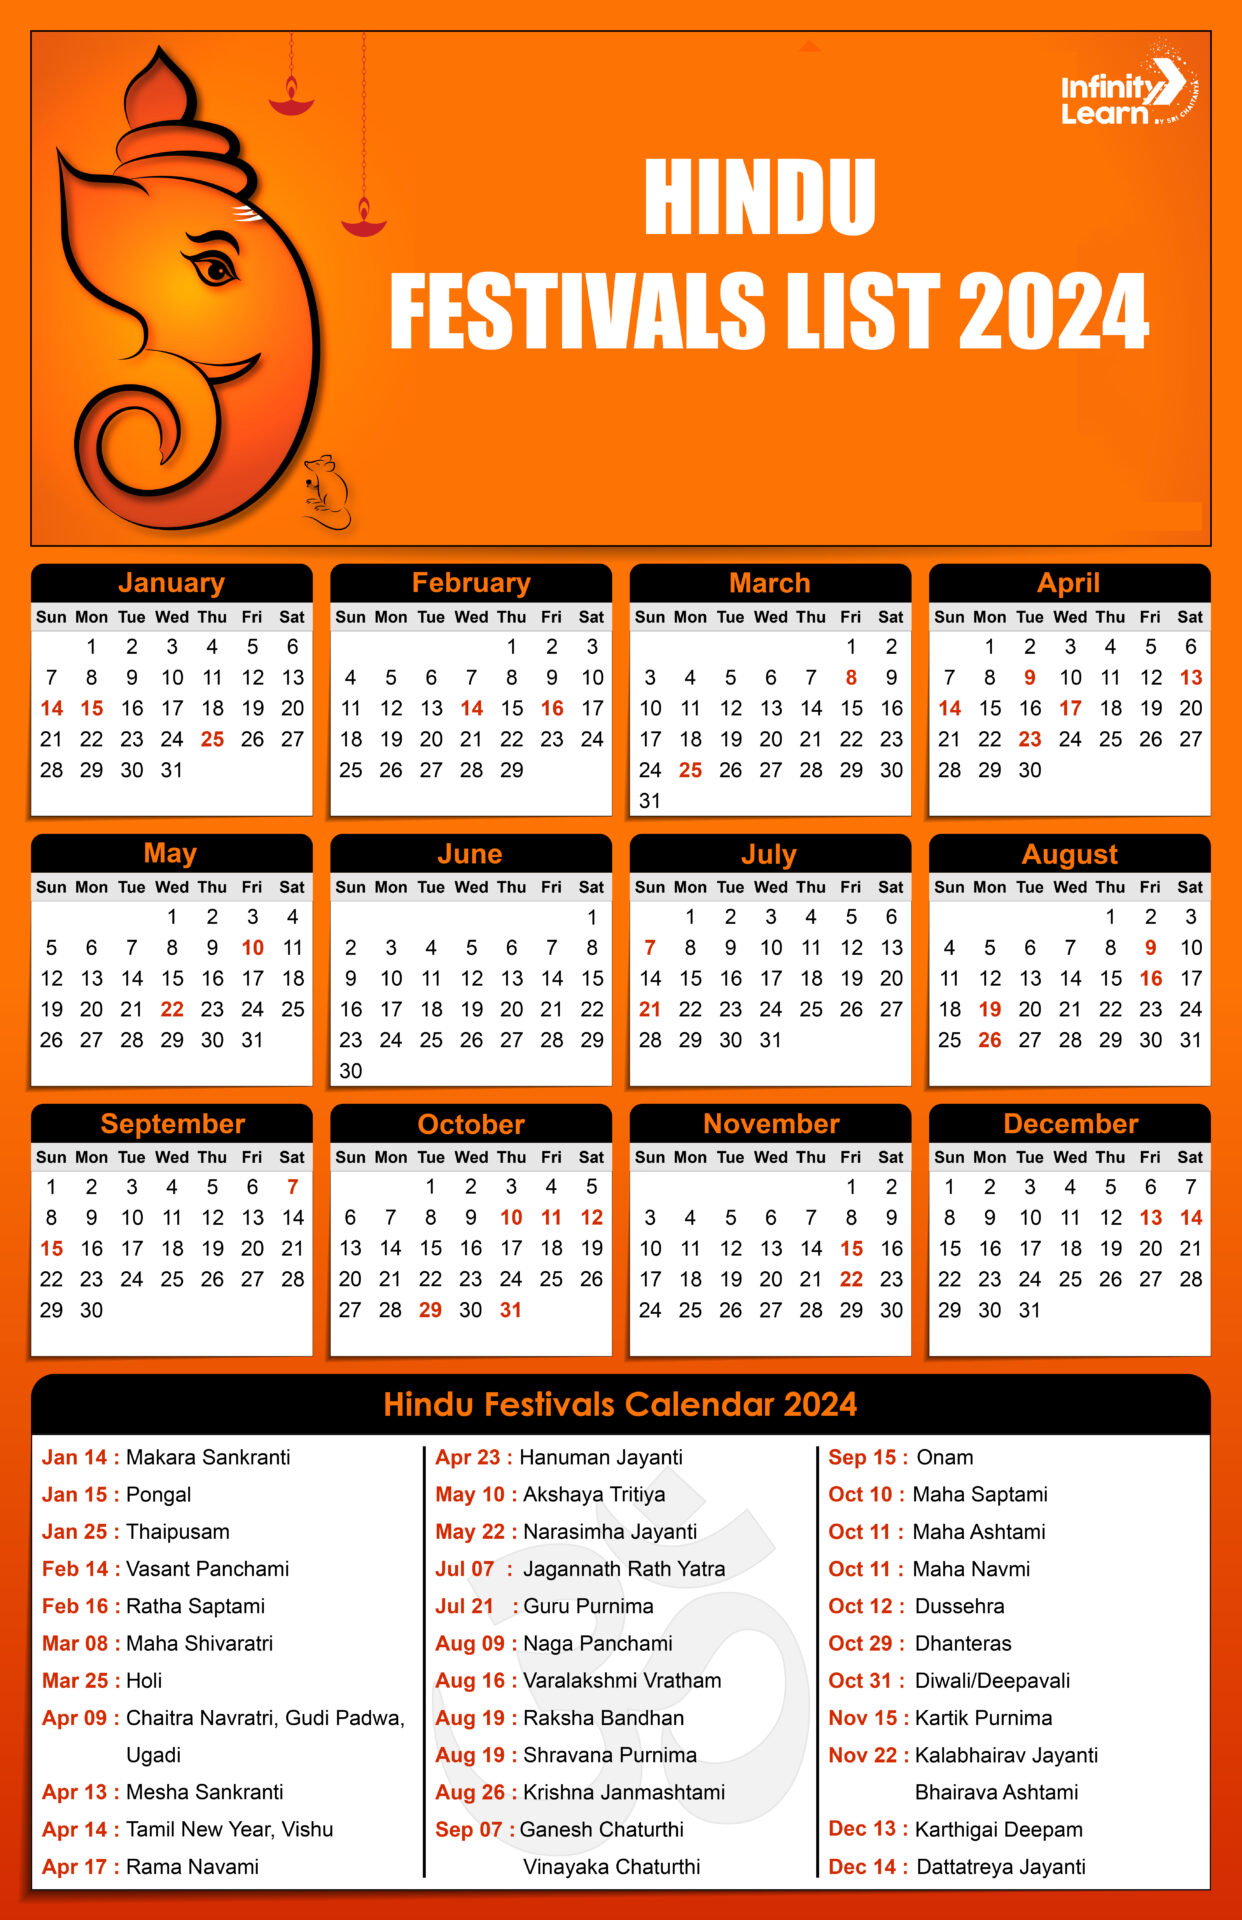 Hindu Festivals List 2024 